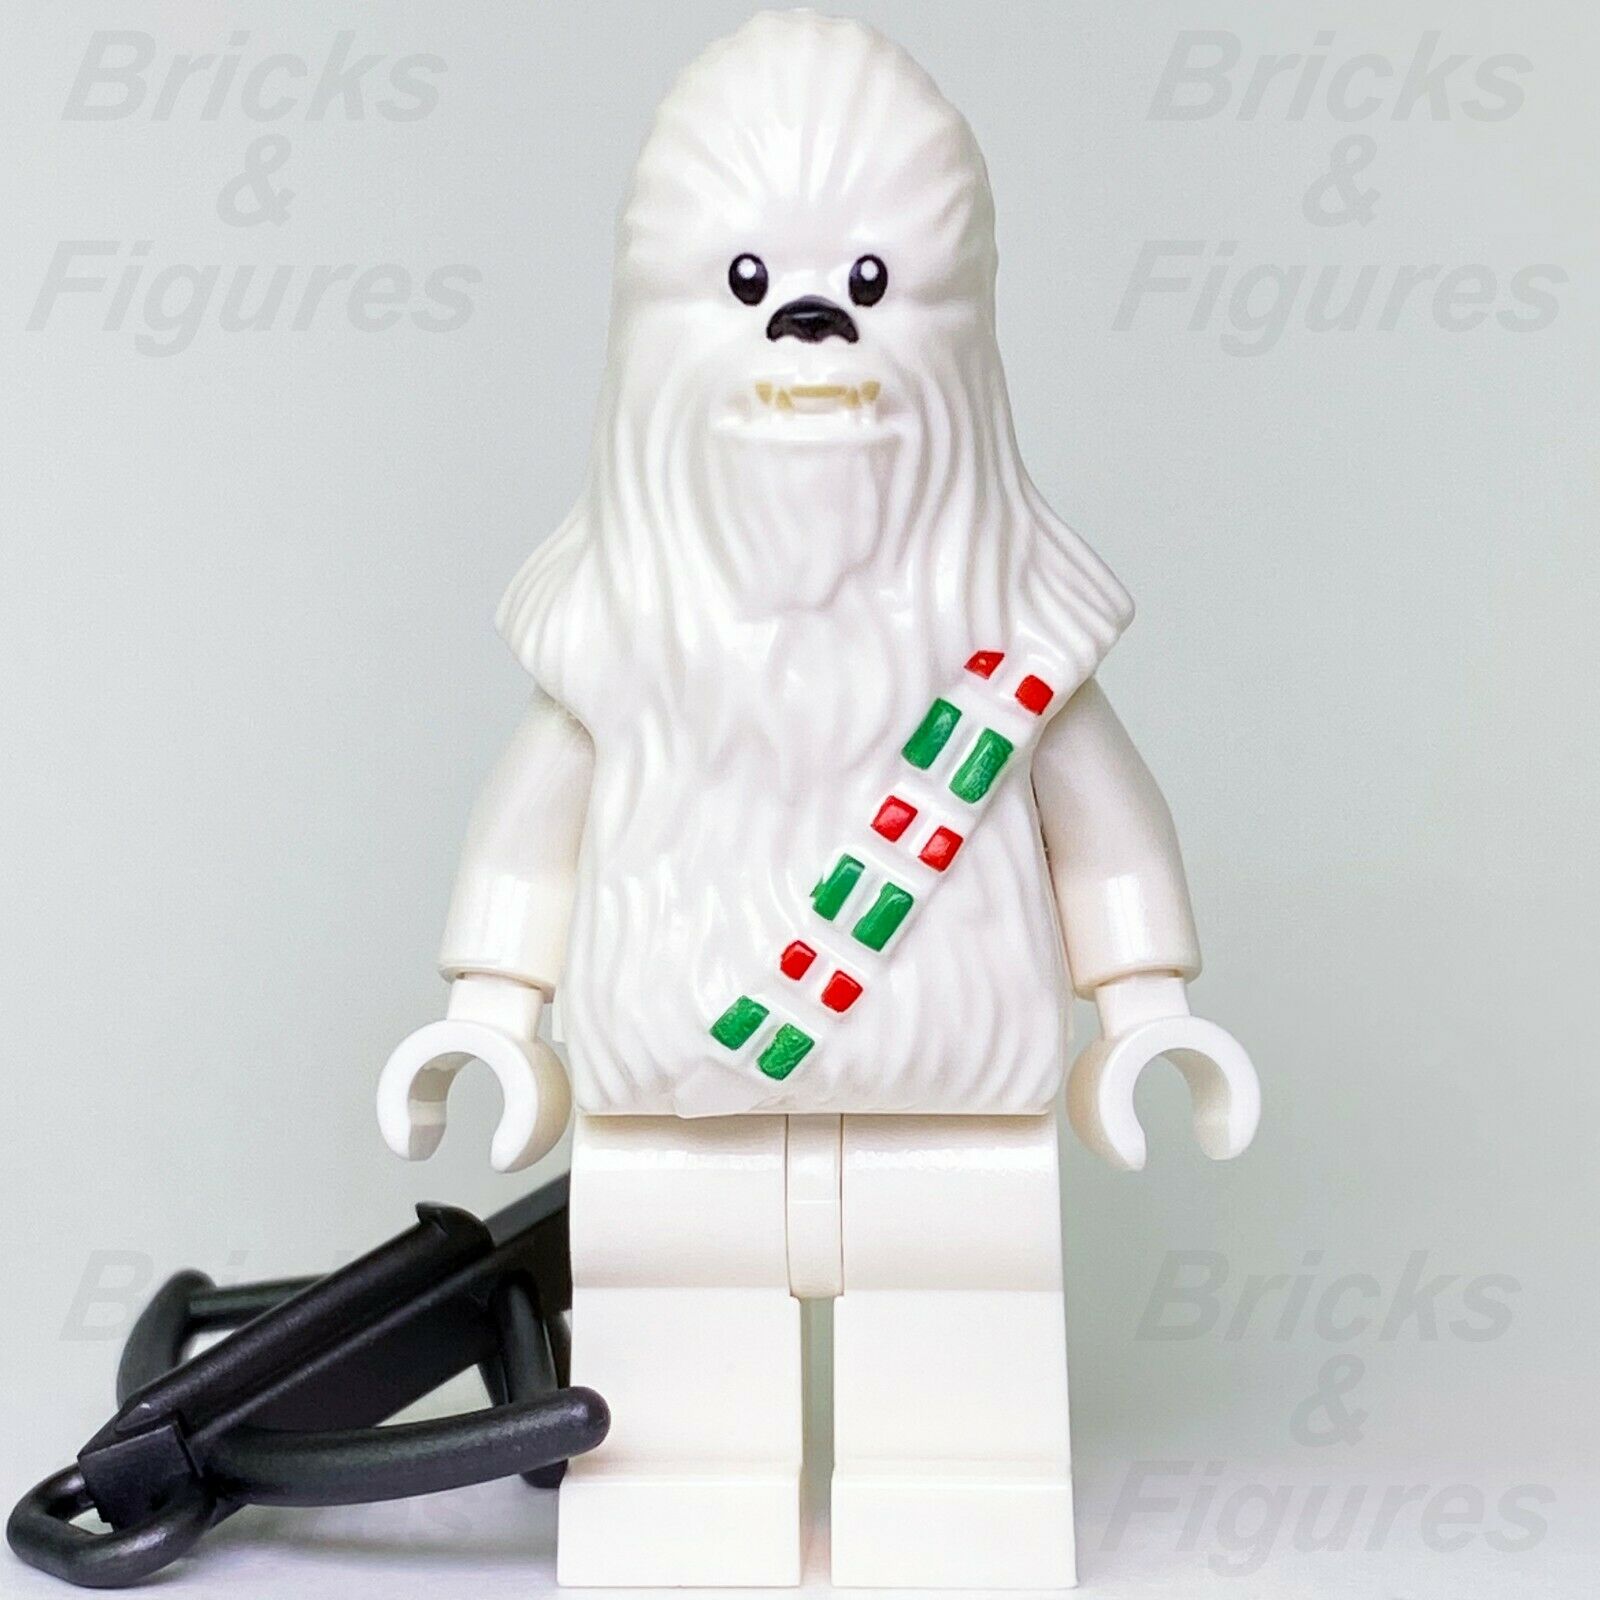 Star Wars LEGO Snow Chewbacca White Wookiee Warrior Christmas Minifigure 75146 - Bricks & Figures